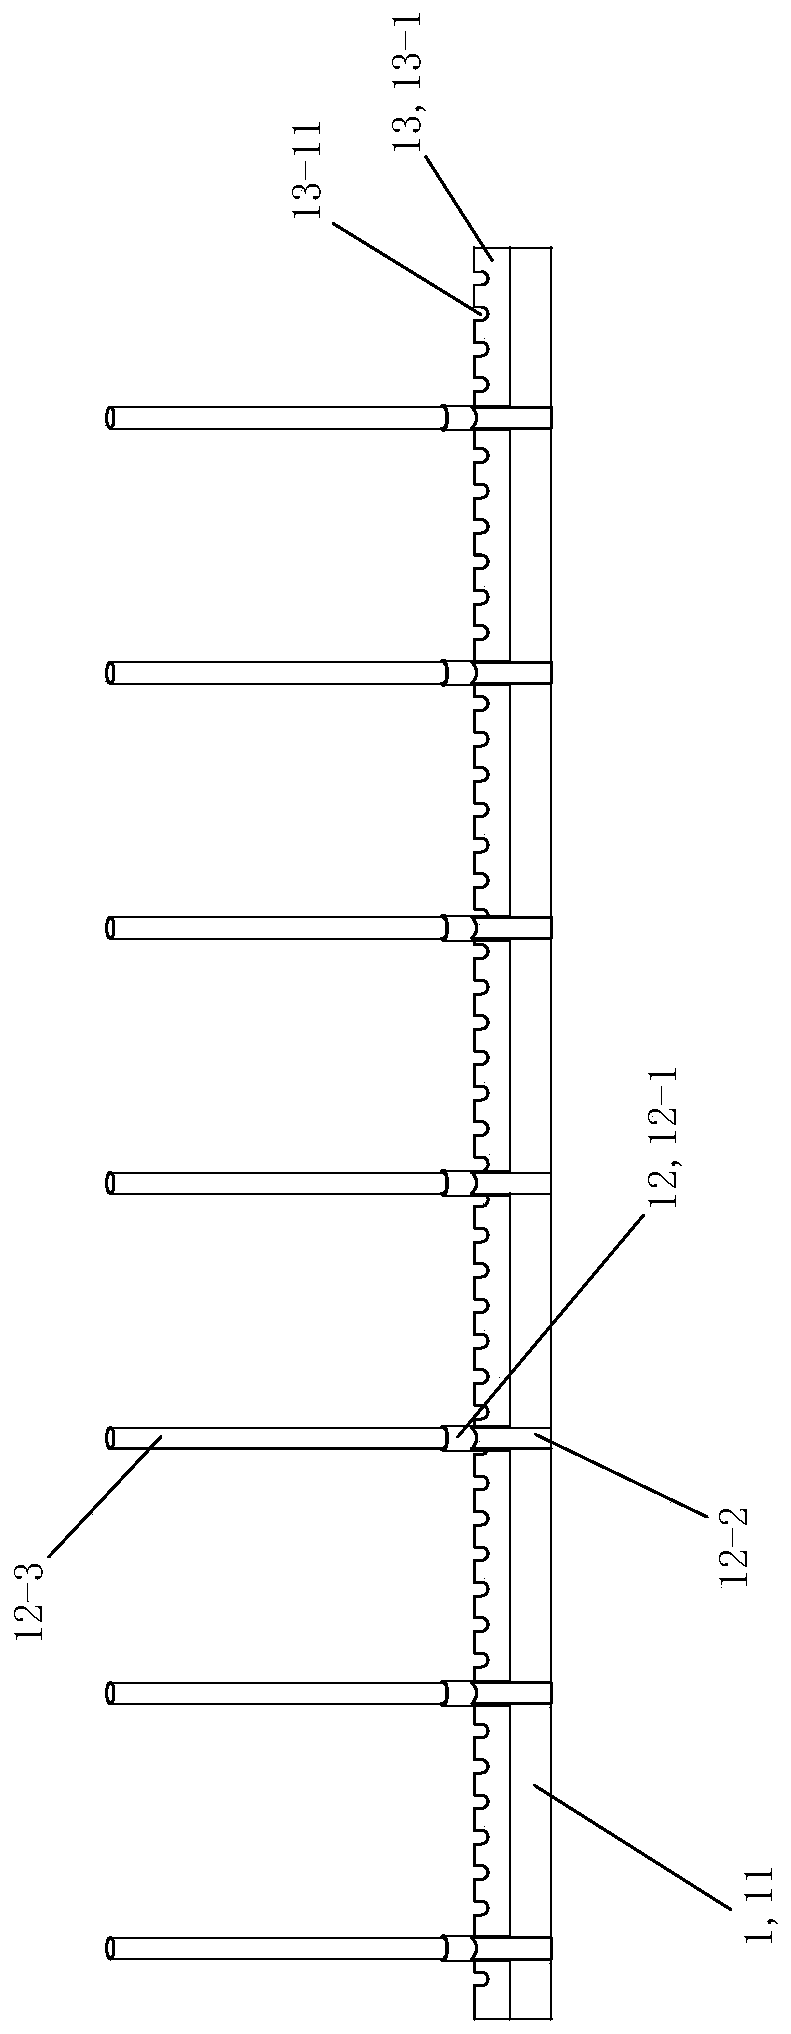 Mounting device and mounting method of prefabricated box girder bottom web steel bar framework